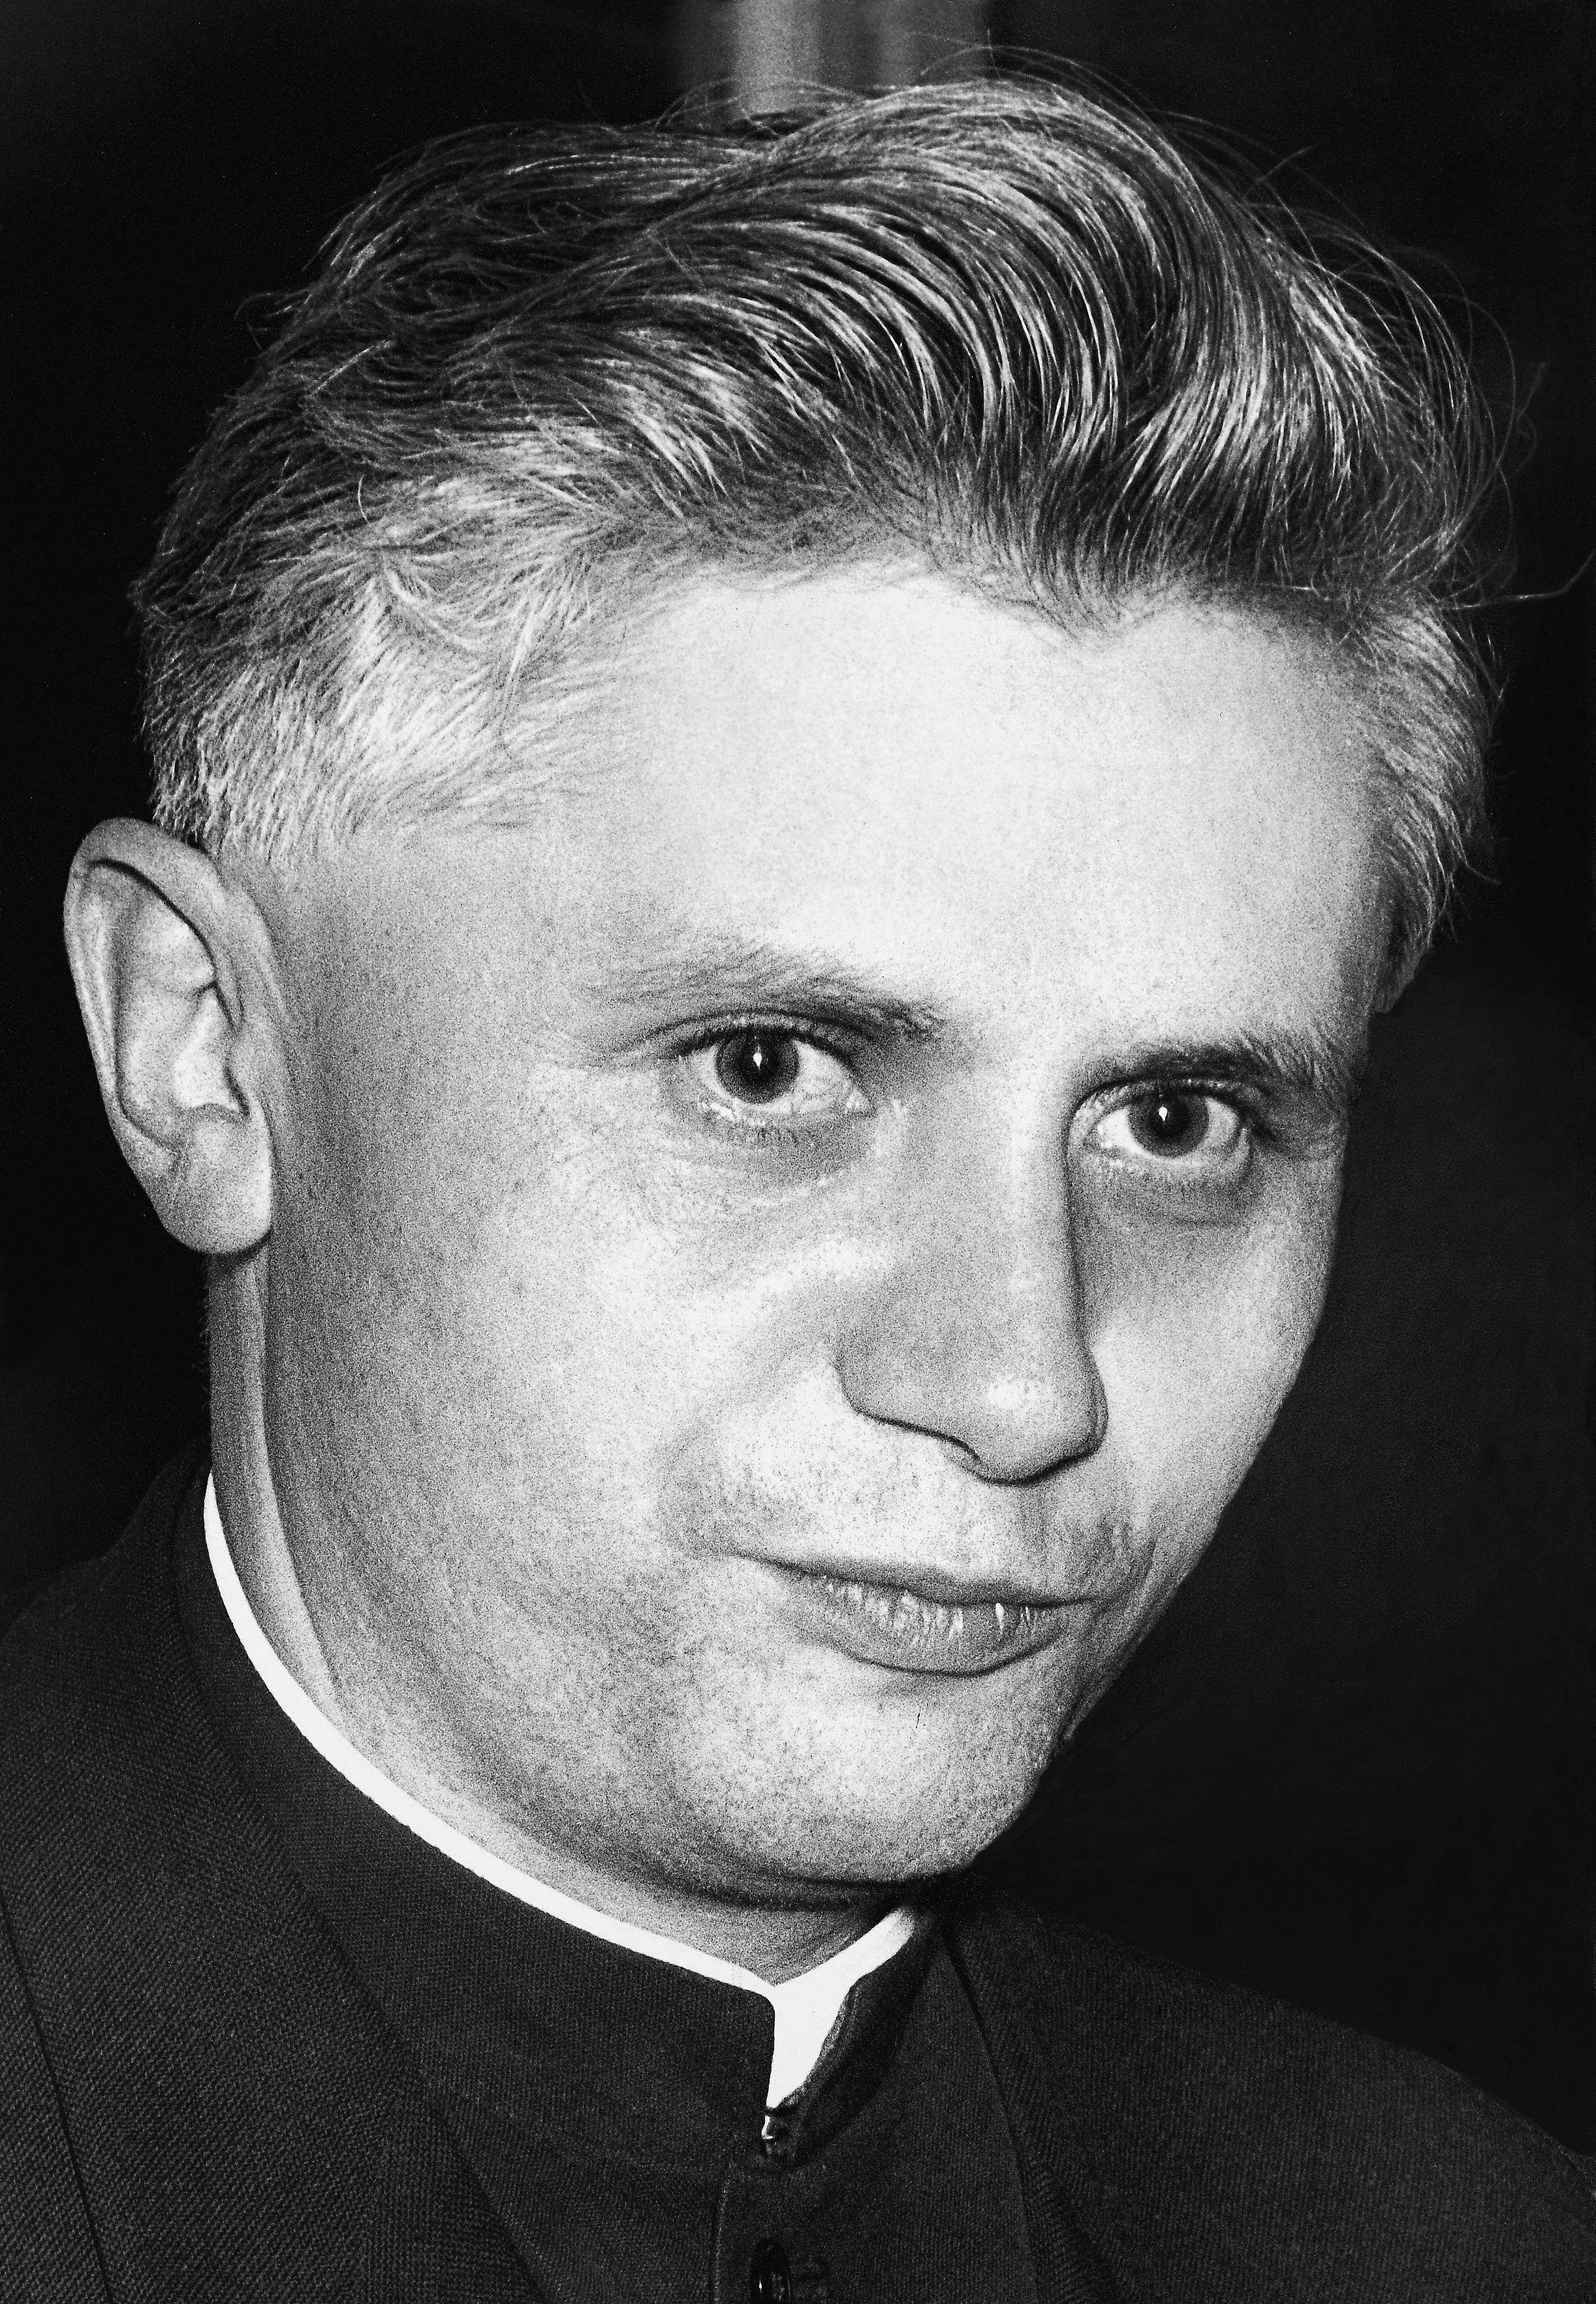 Josep Ratzinger